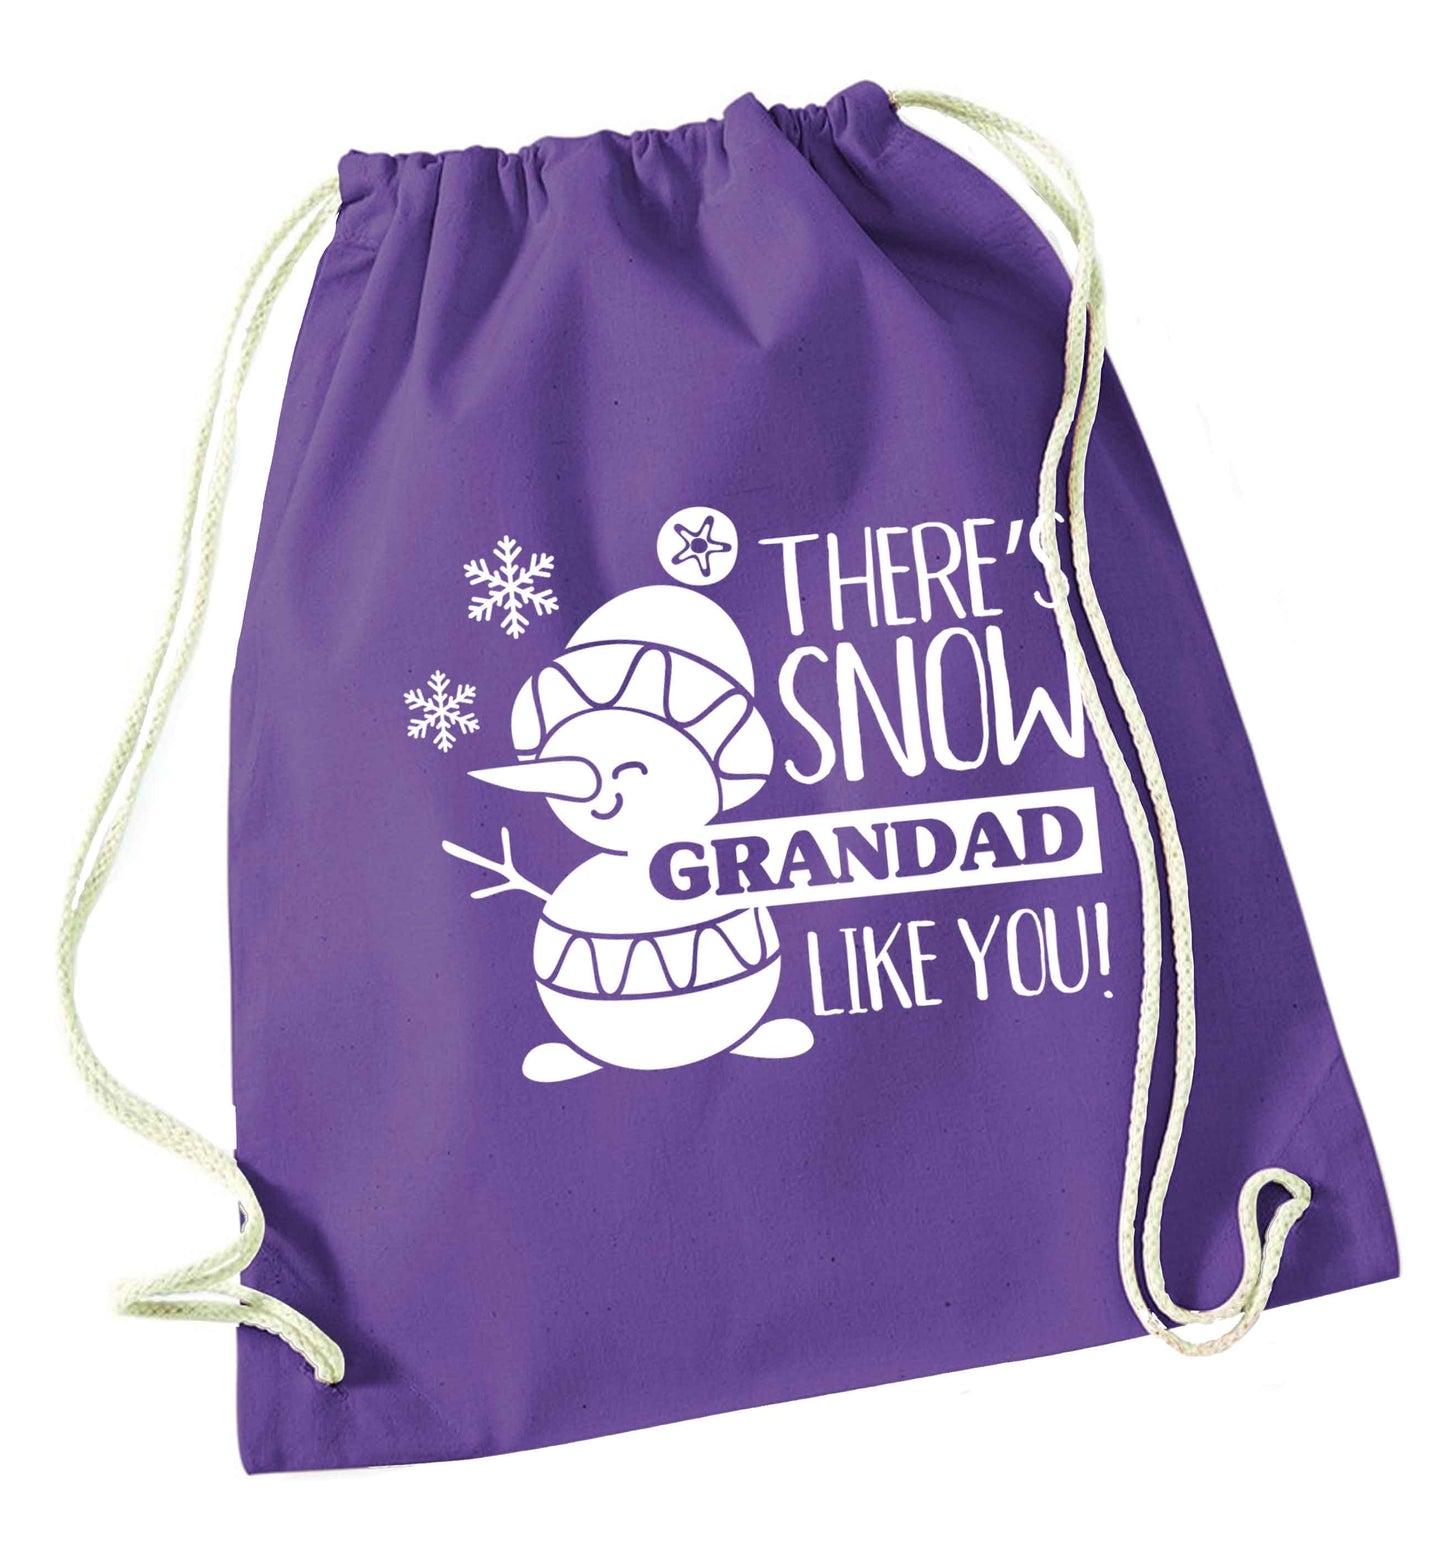 There's snow grandad like you purple drawstring bag